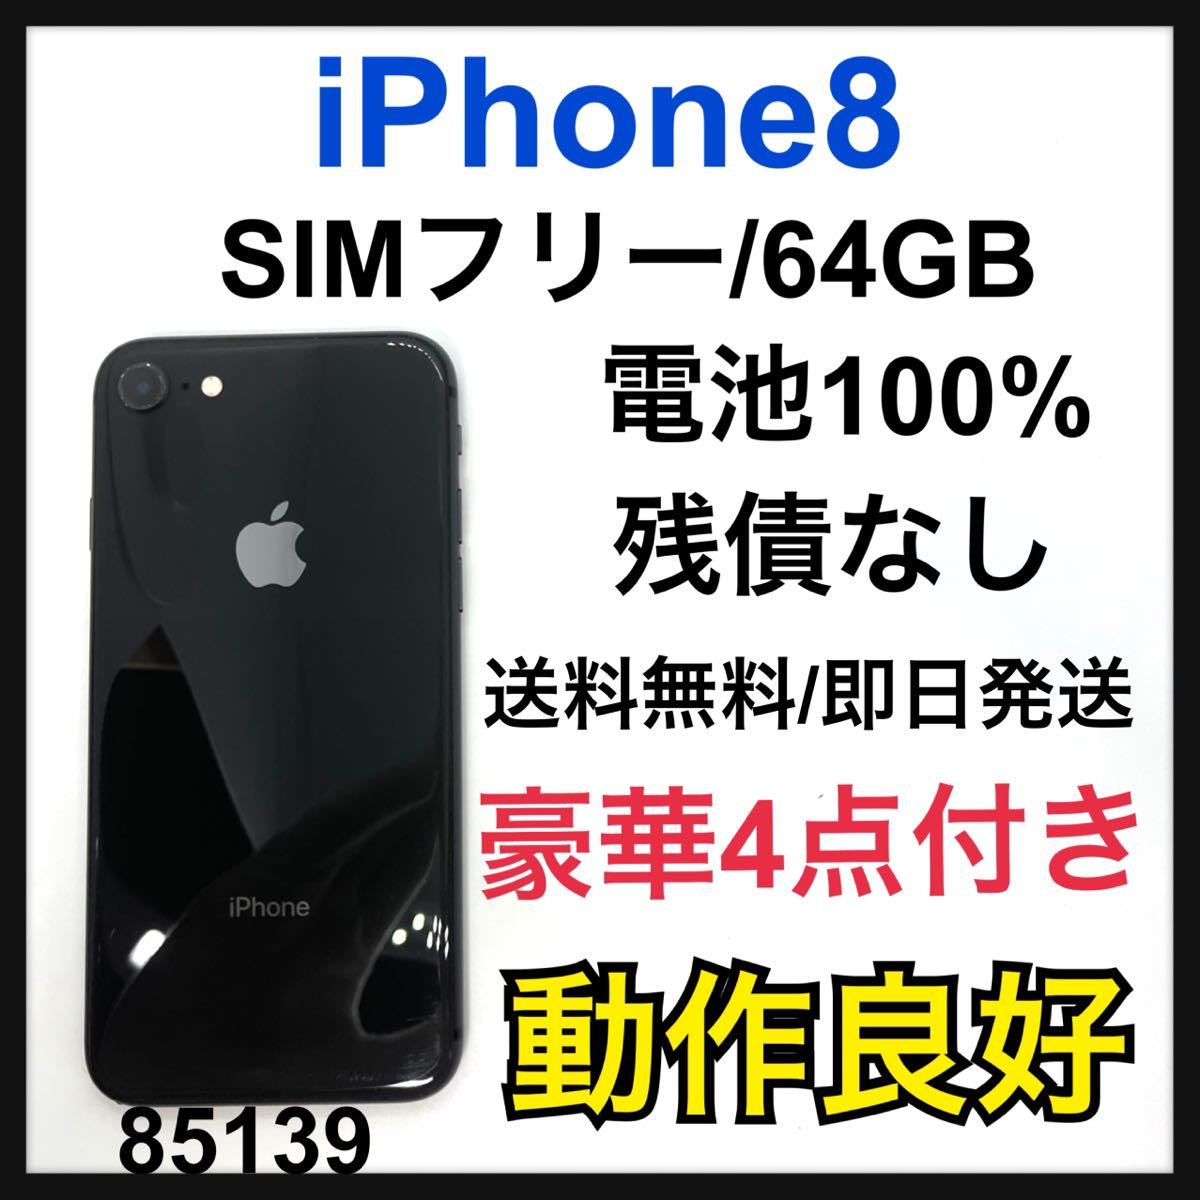 100% iPhone 8 Space Gray 64 GB SIMフリー 本体 kanfa720.com